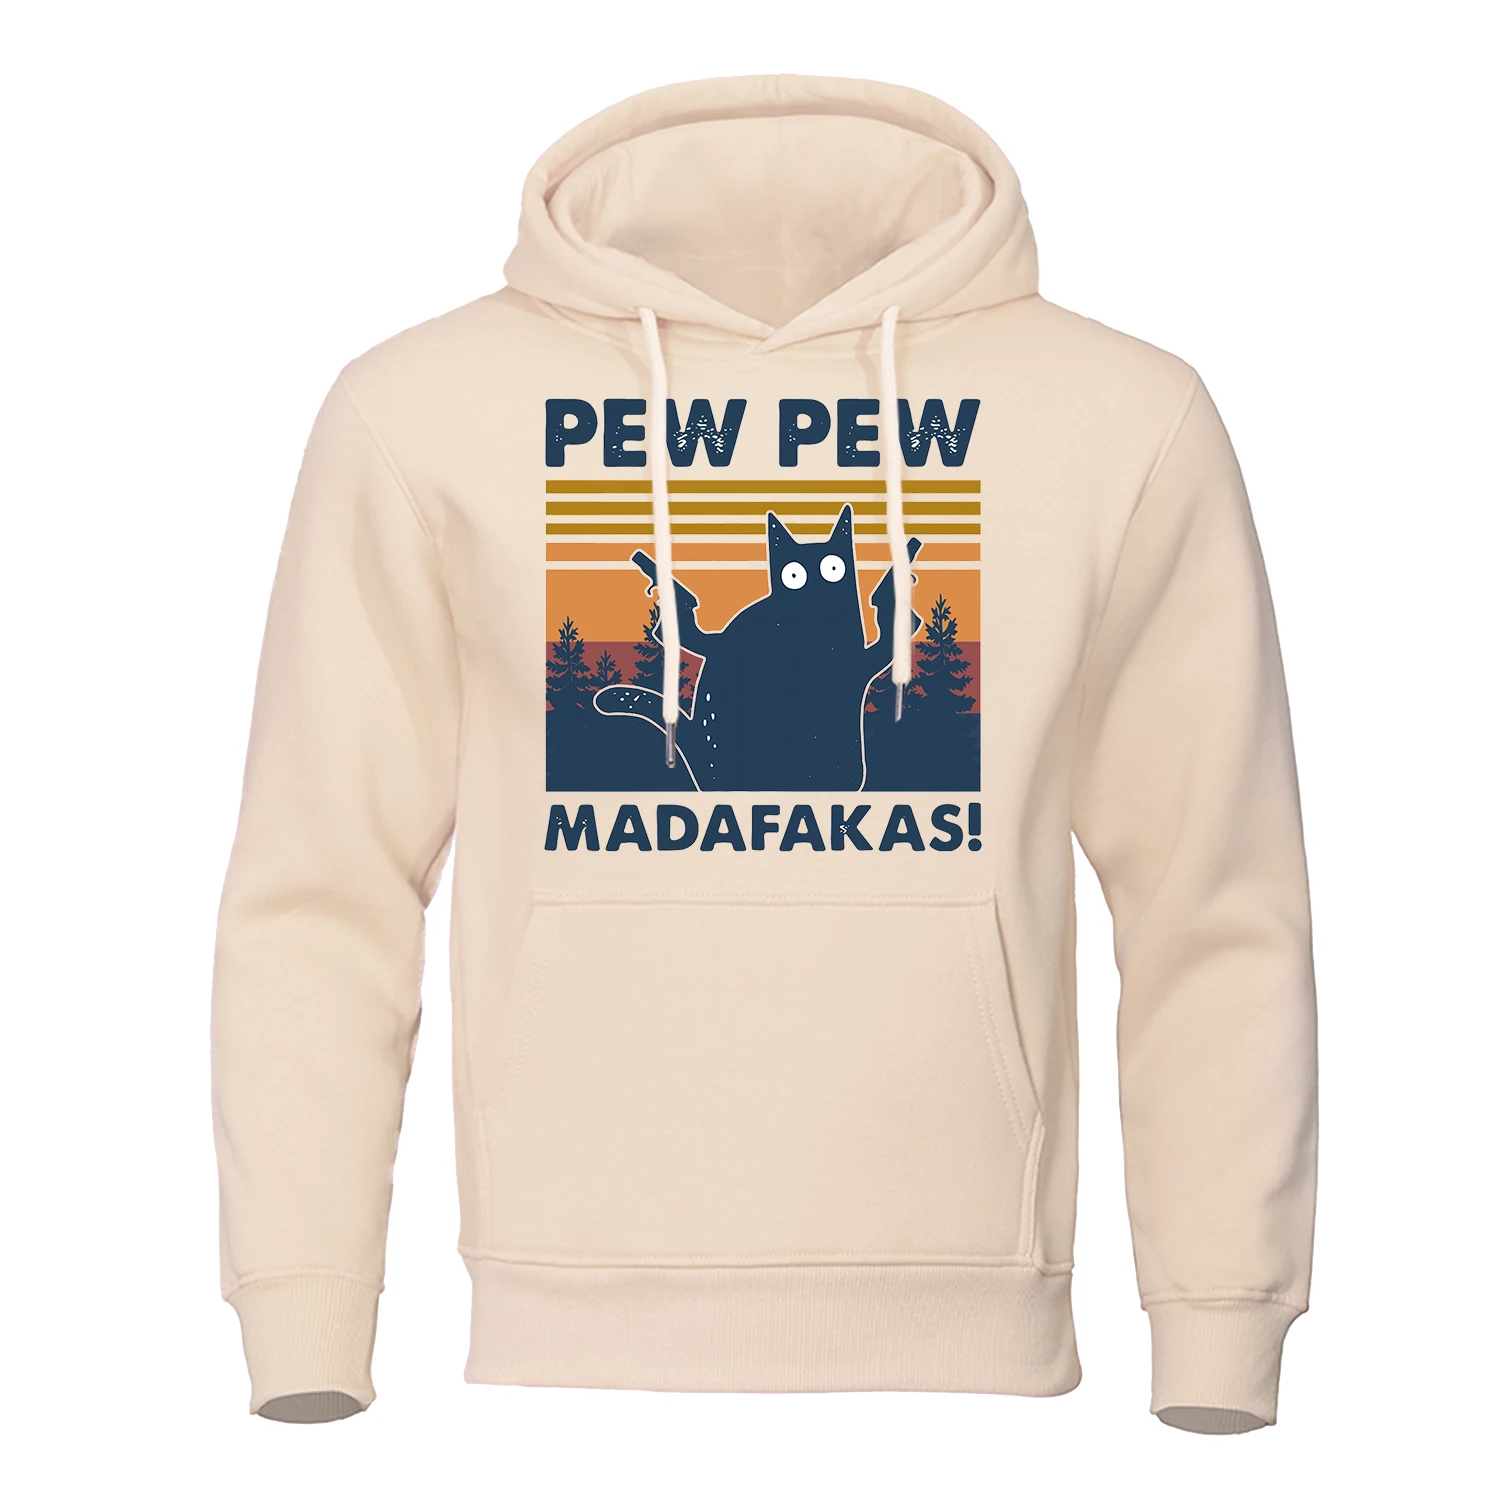 

Pew Pew Madafakas A Cat With Two Guns Print Hoodies Men Fashion Style Hoody Loose Fleece Clothing Oversize Pullover Sweatshirt